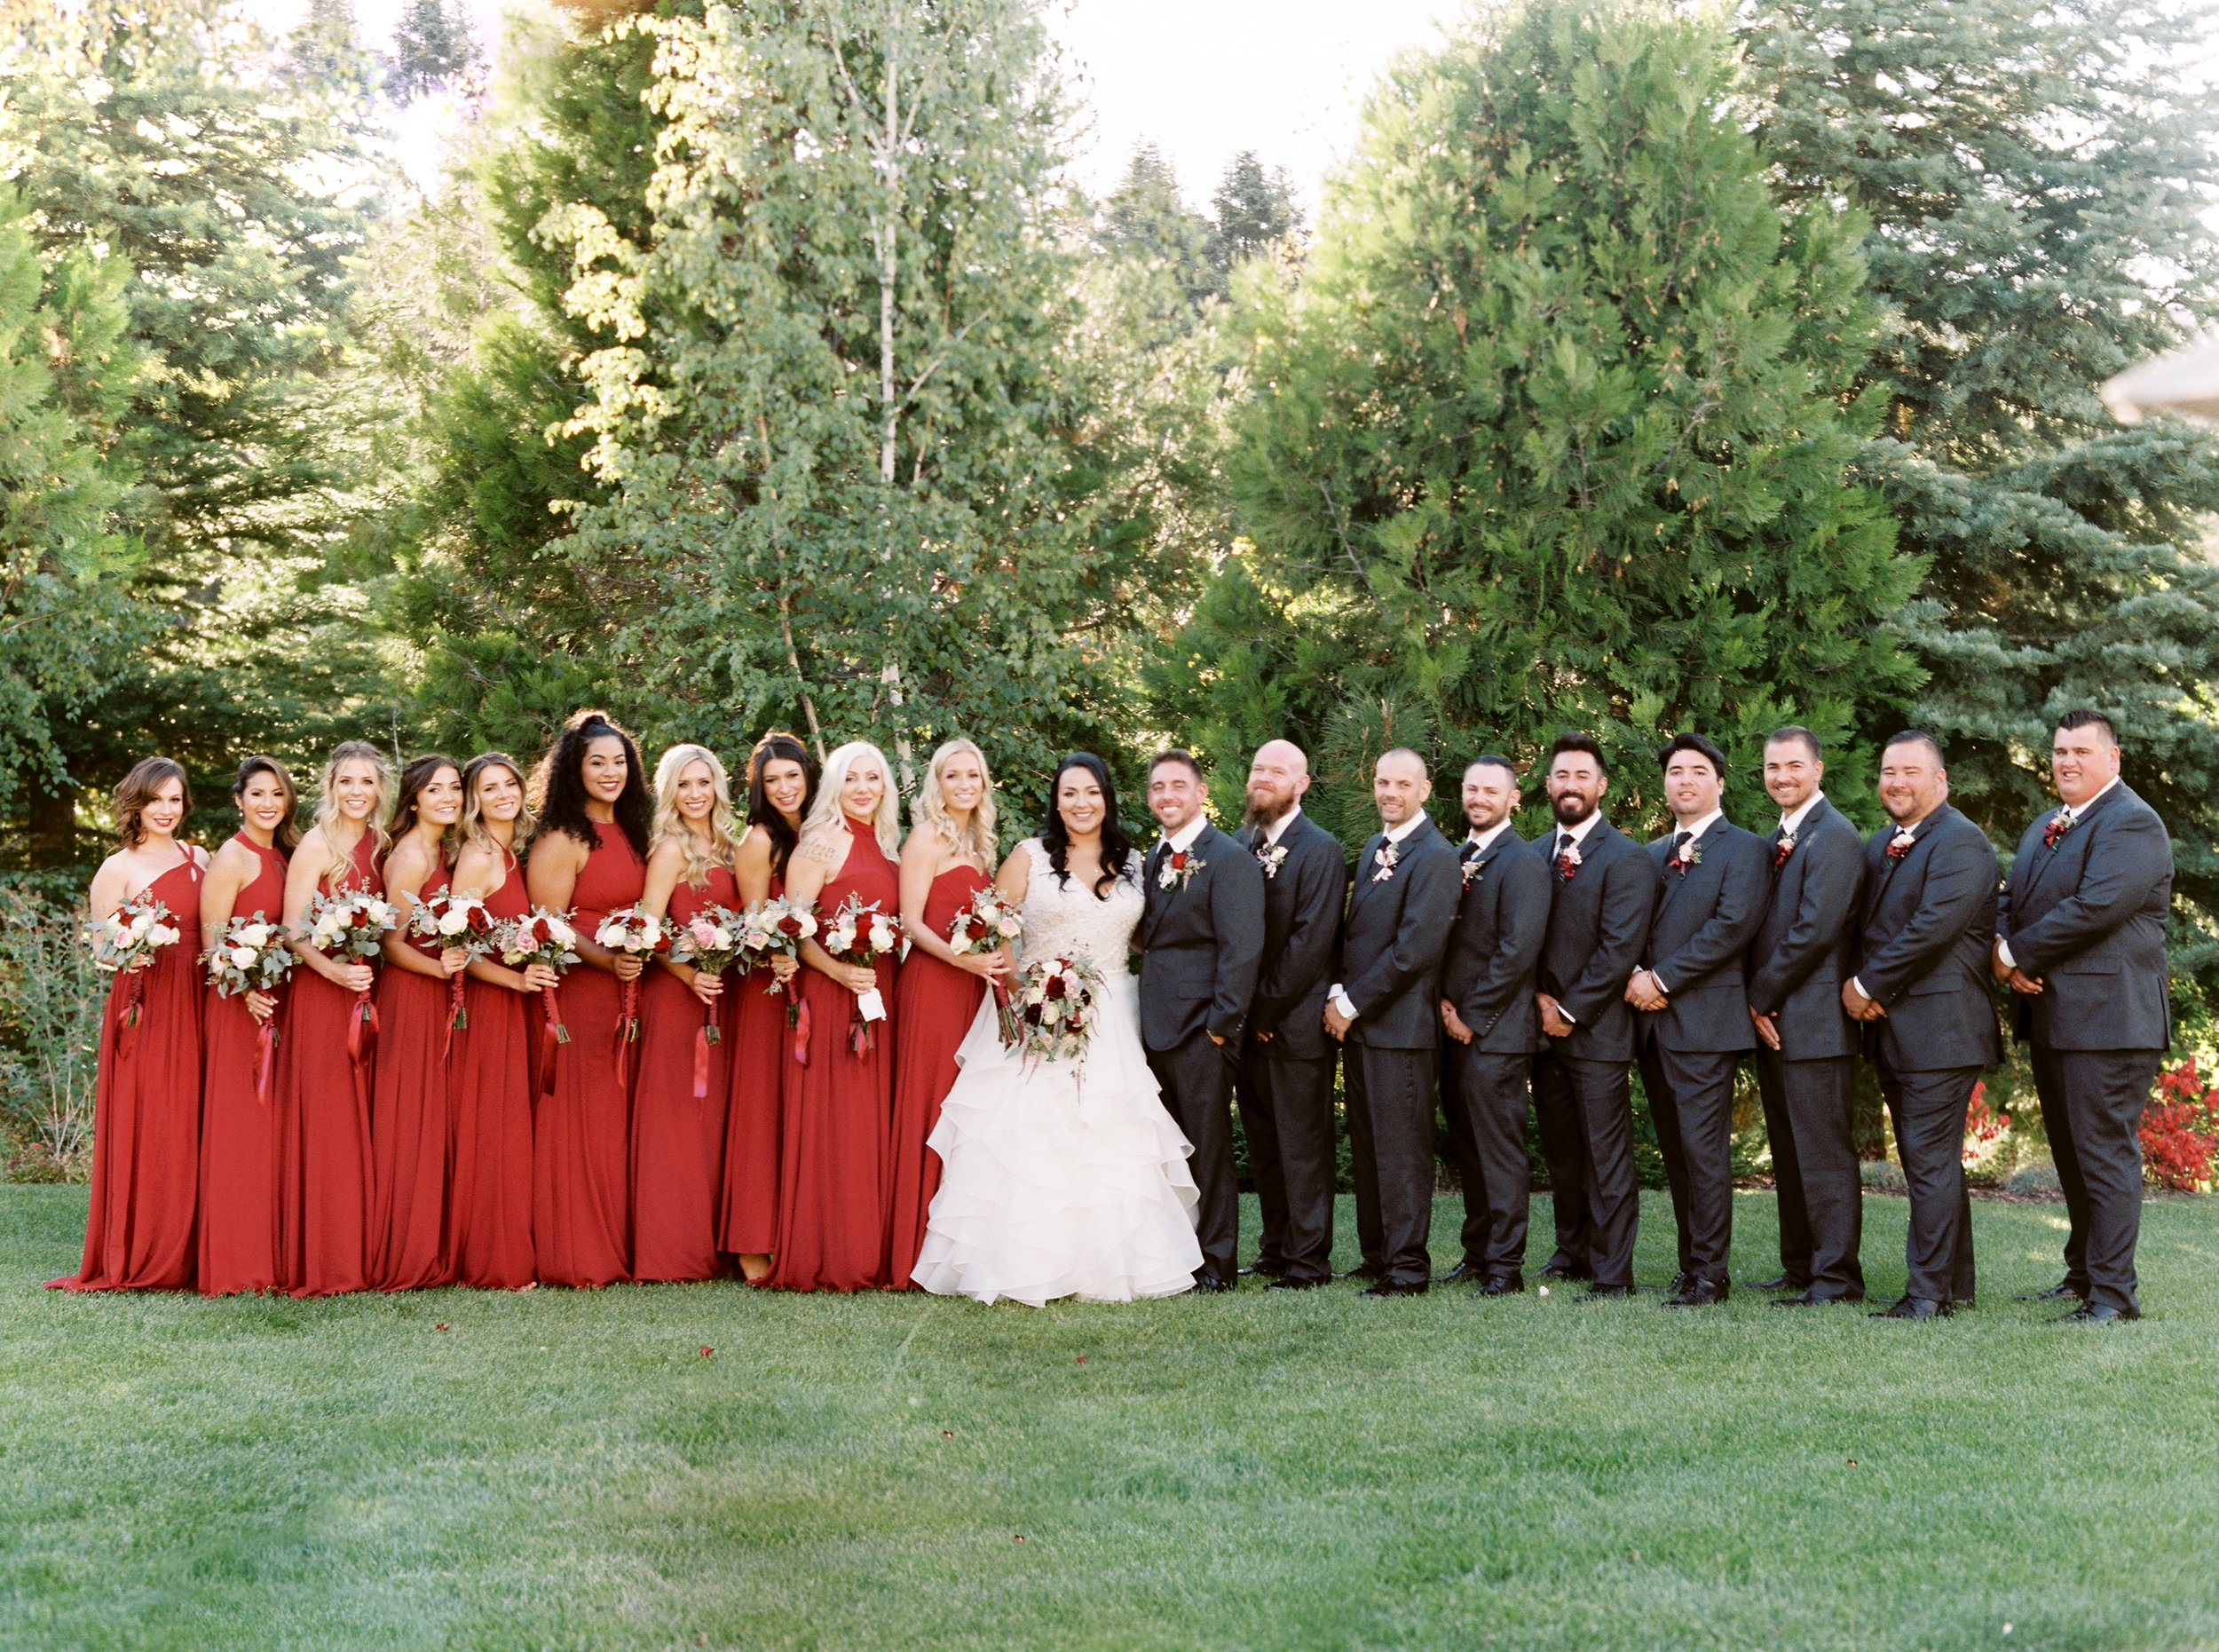 Tenaya-lodge-wedding-at-yosemite-national-park-california-84.jpg